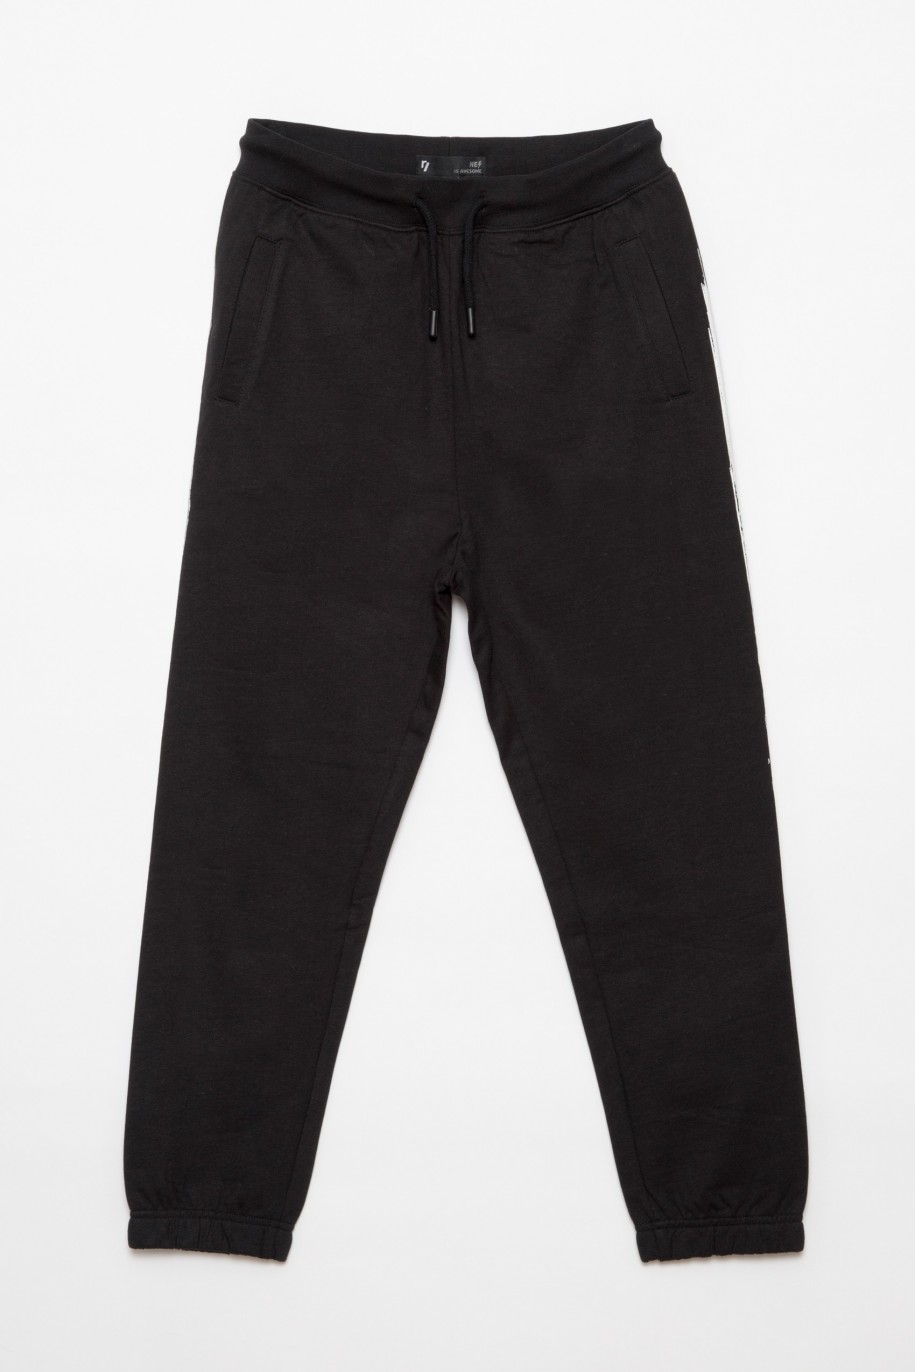 Czarne spodnie dresowe dla chłopaka REBEL BRUSH - 32283